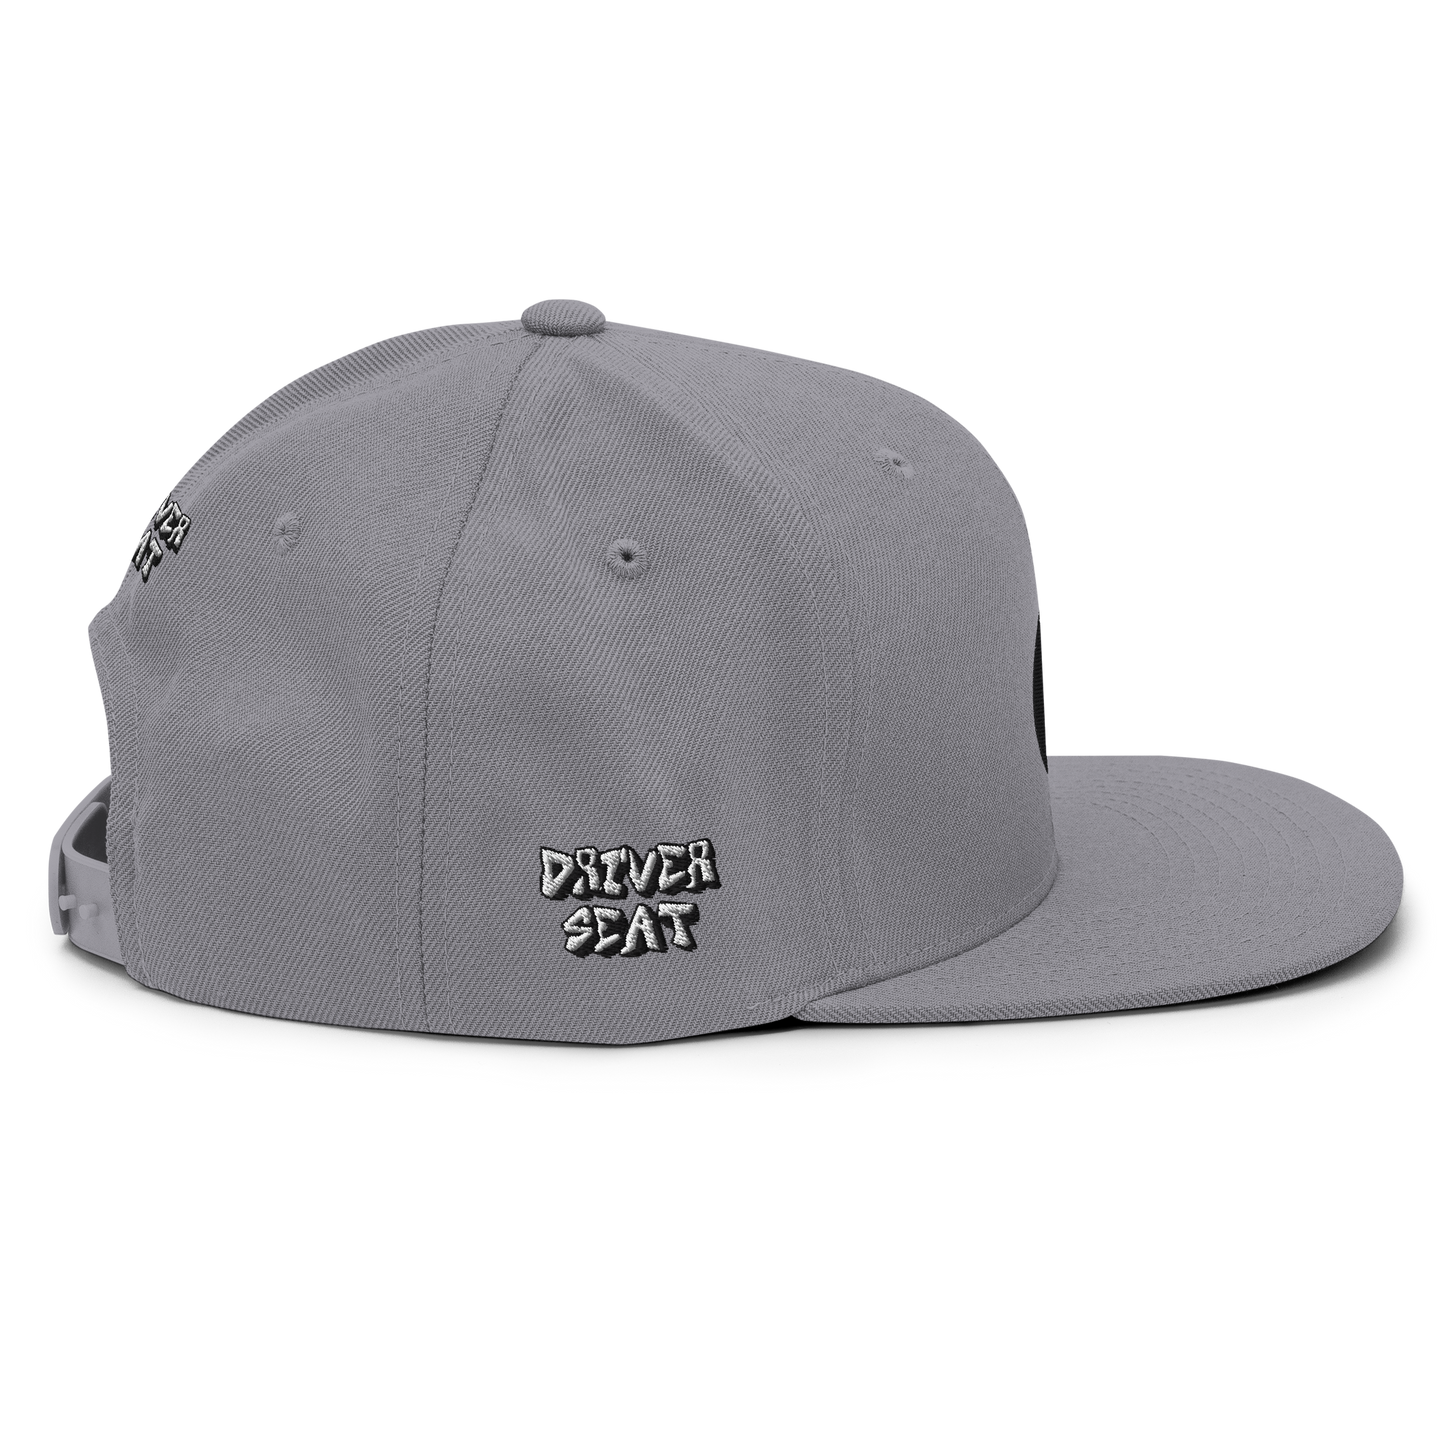 NBD Bimmer Hat Snapback - Silver